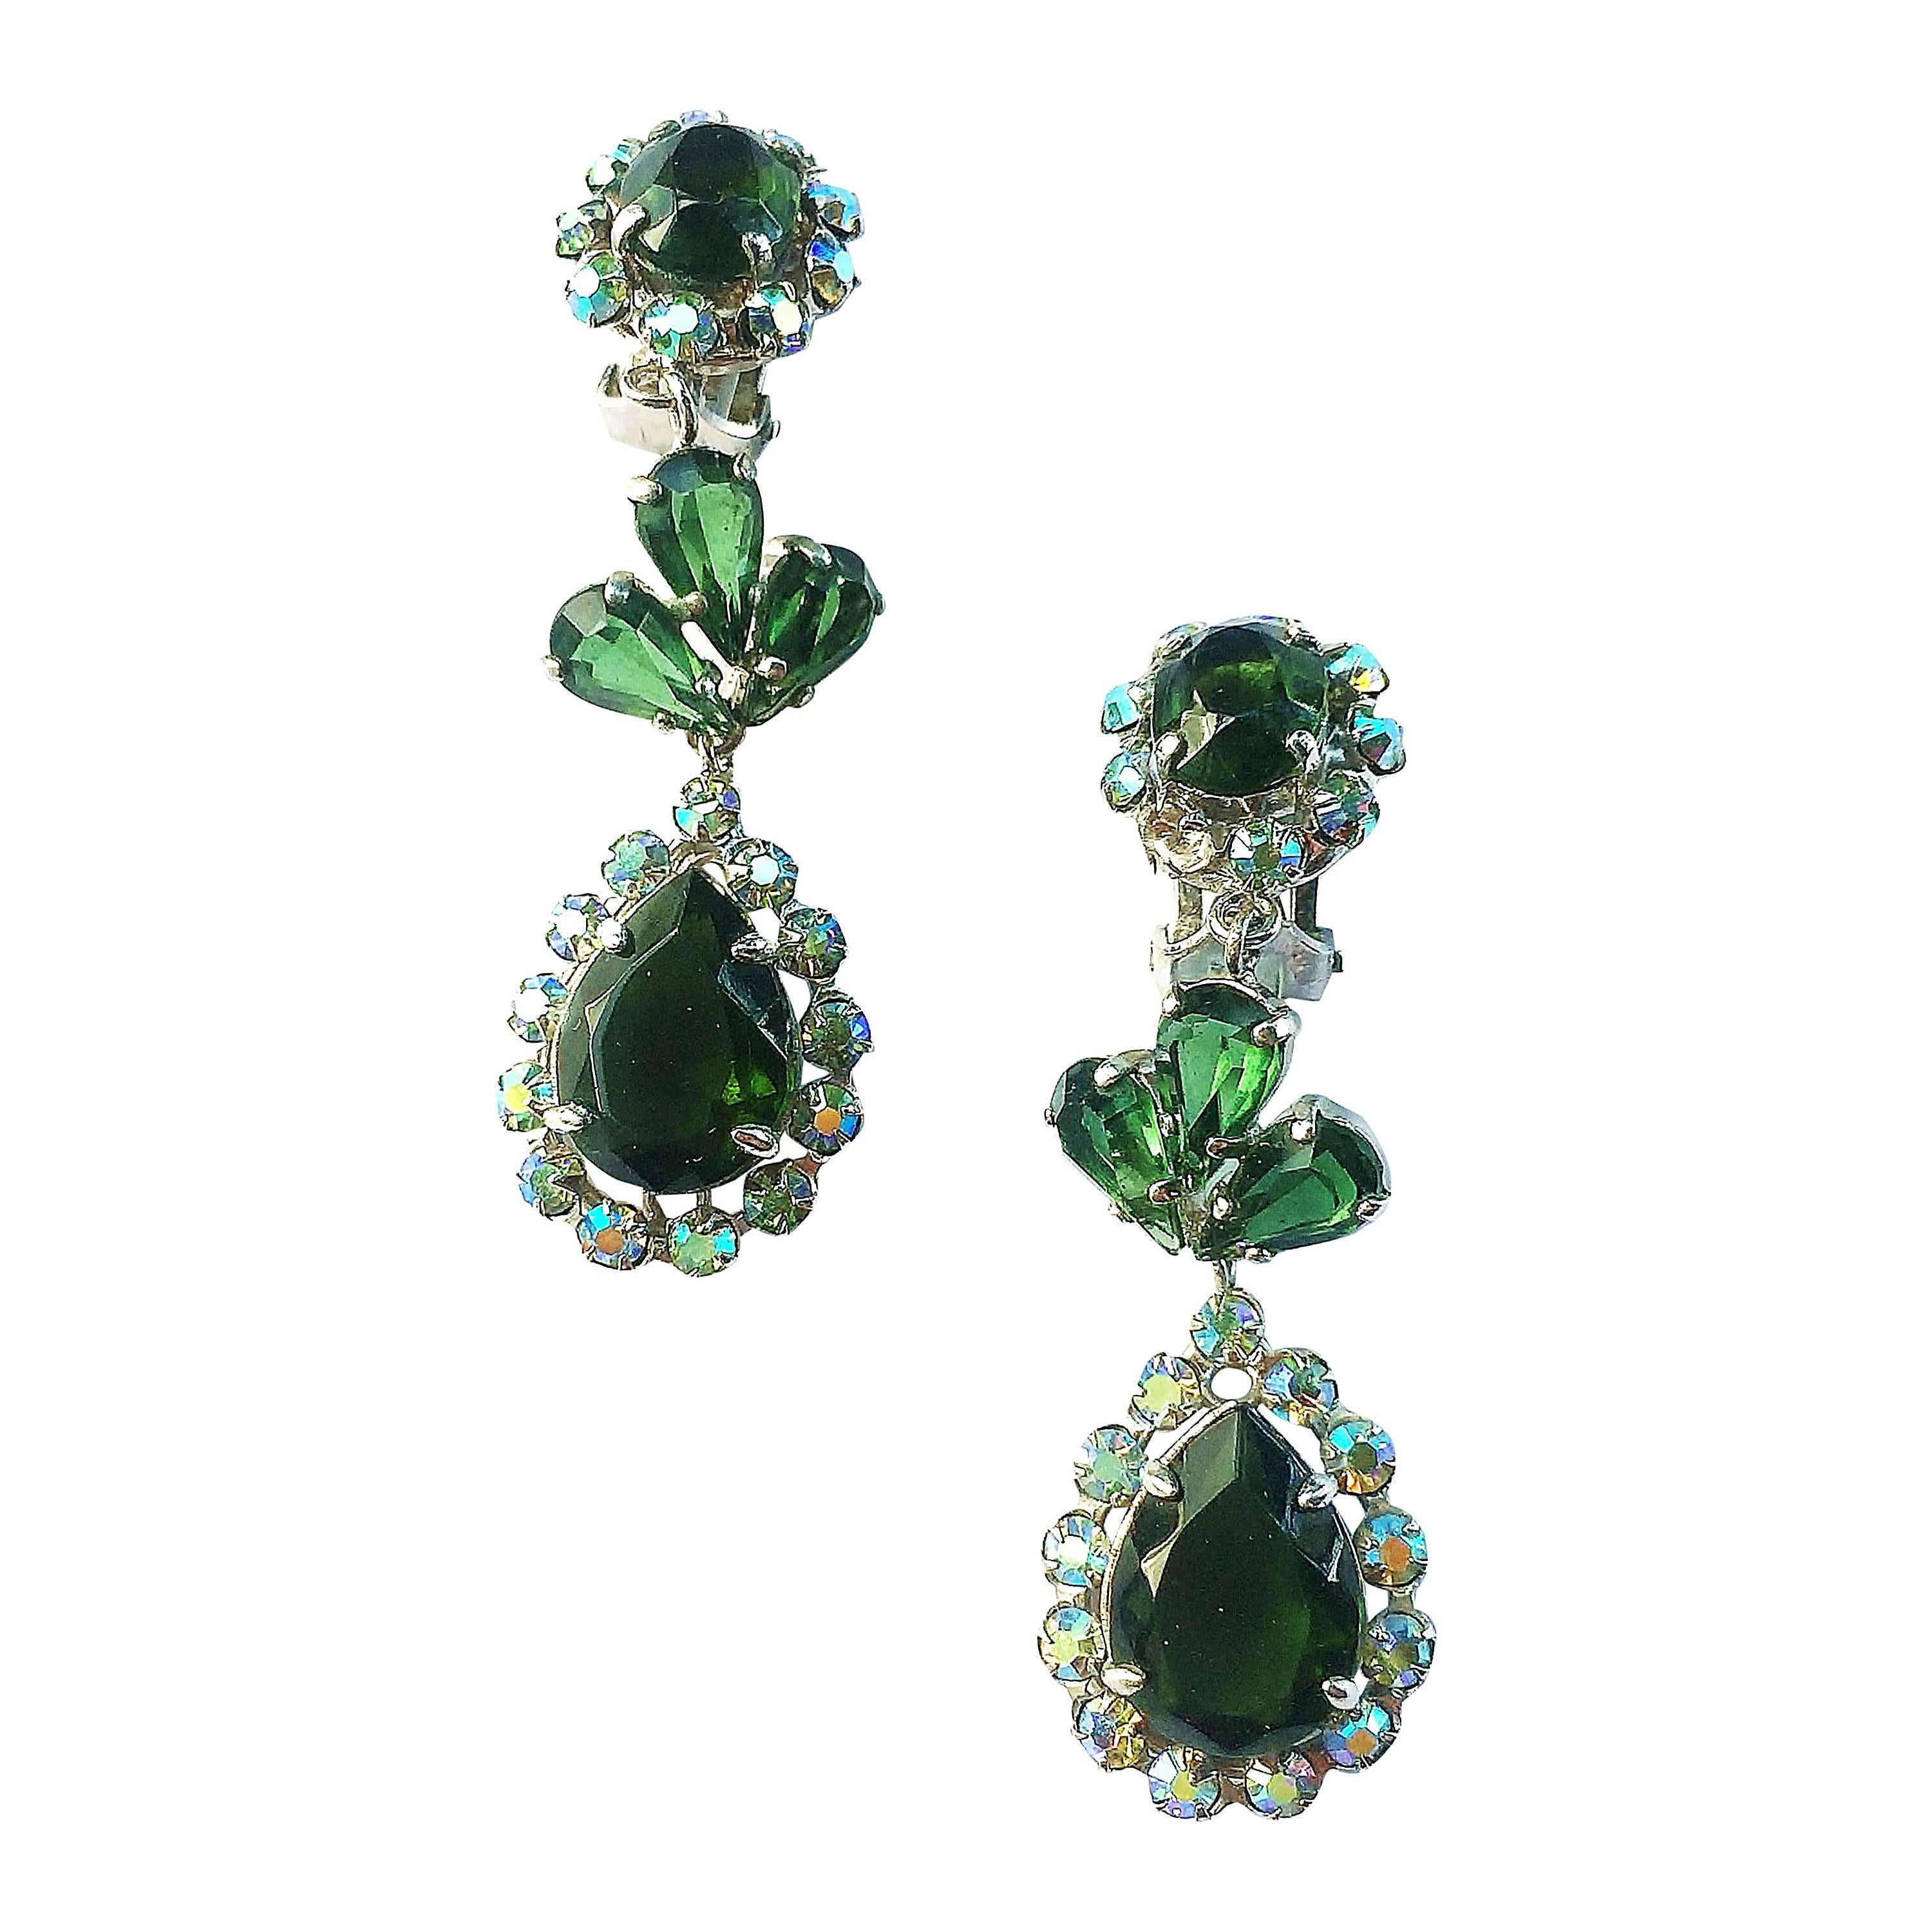 Christian Dior moss green paste drop earrings, 1958